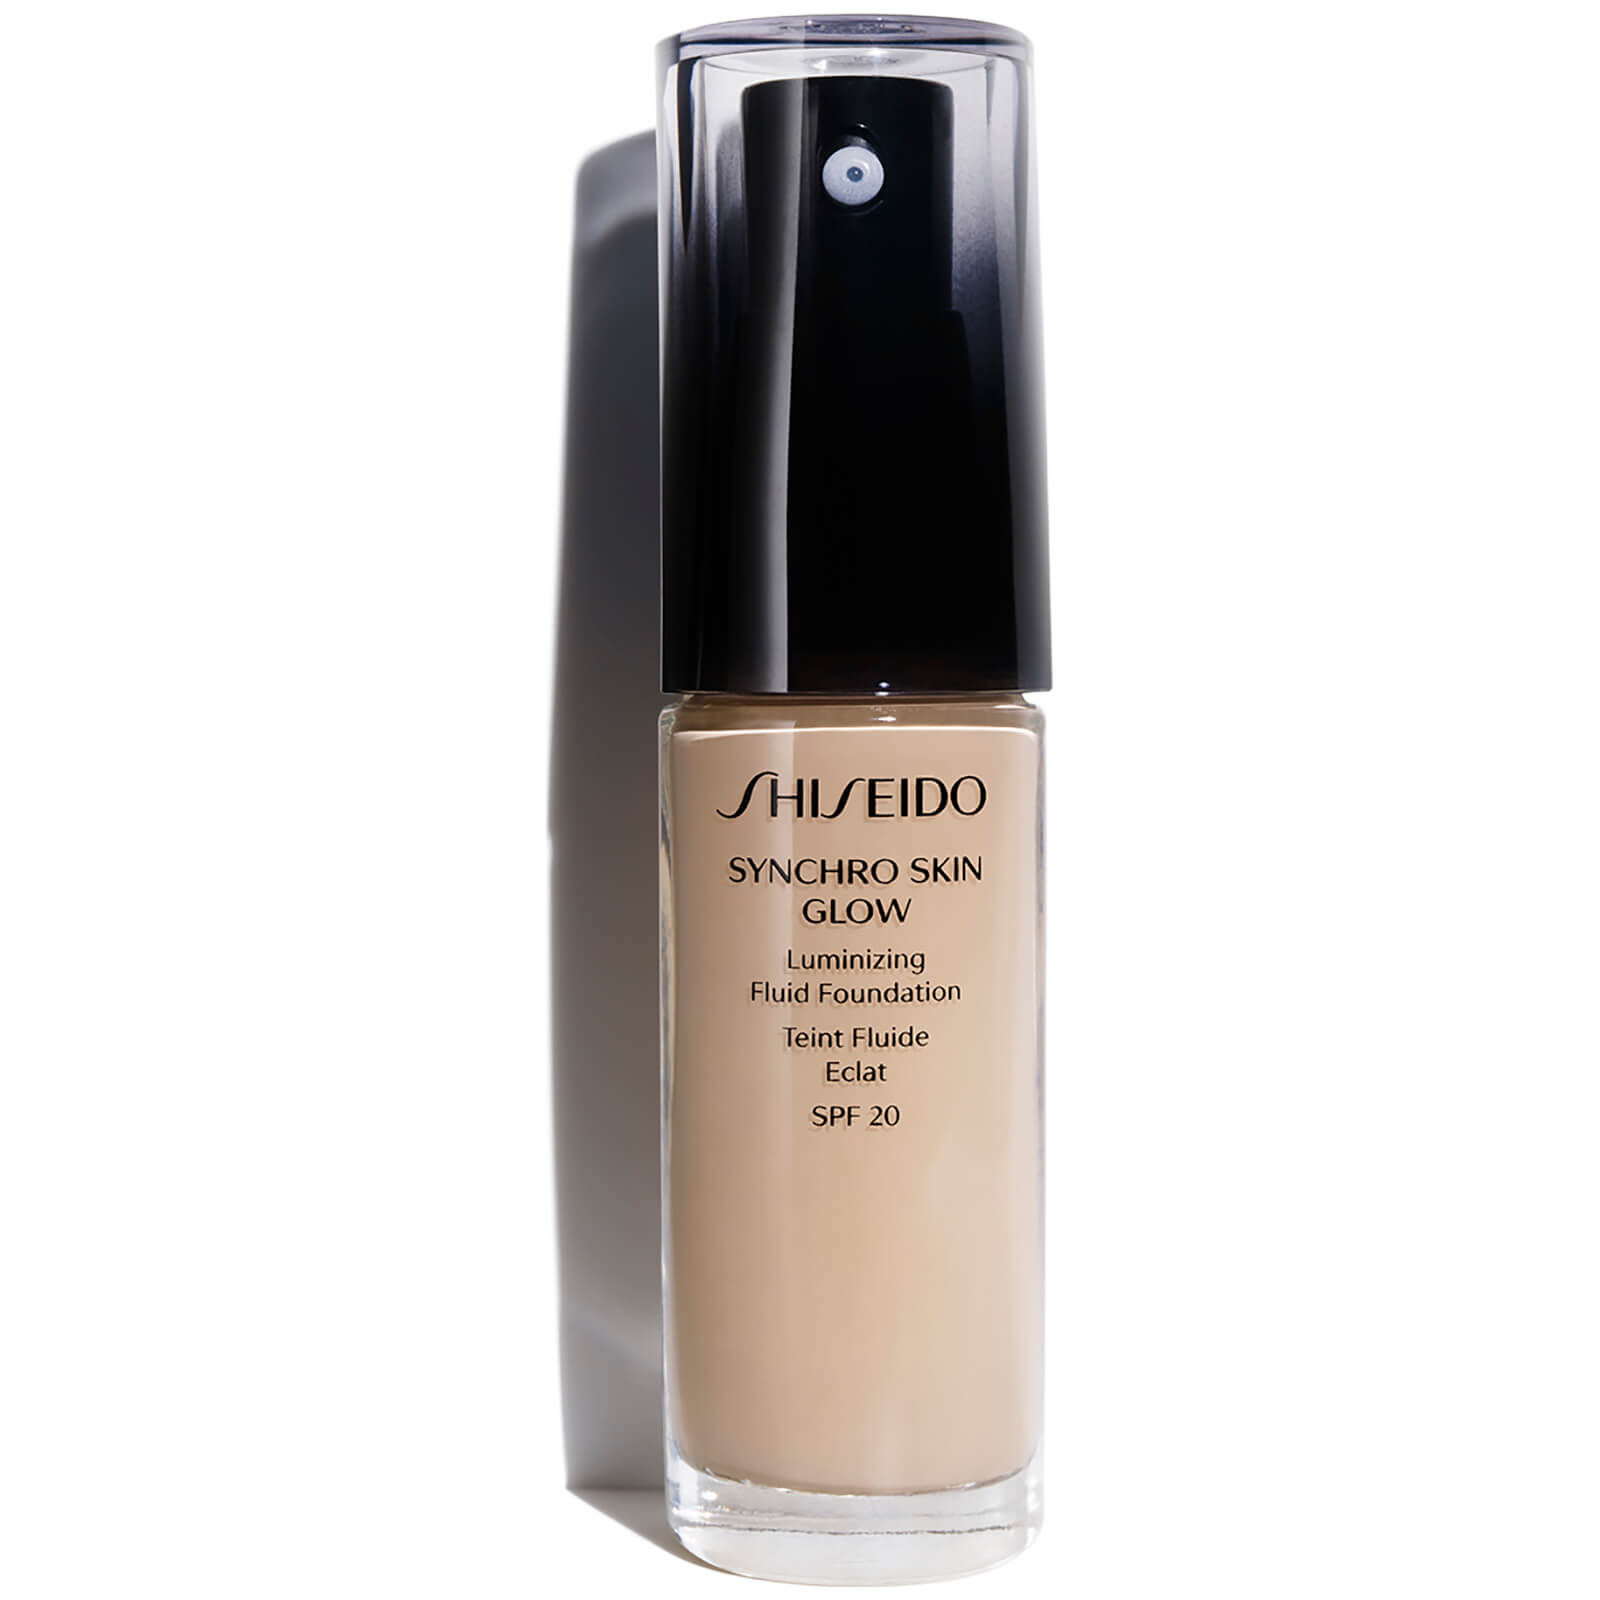 Base Synchro Skin Glow Luminizing da Shiseido 30 ml (Vários tons) - Neutral 2